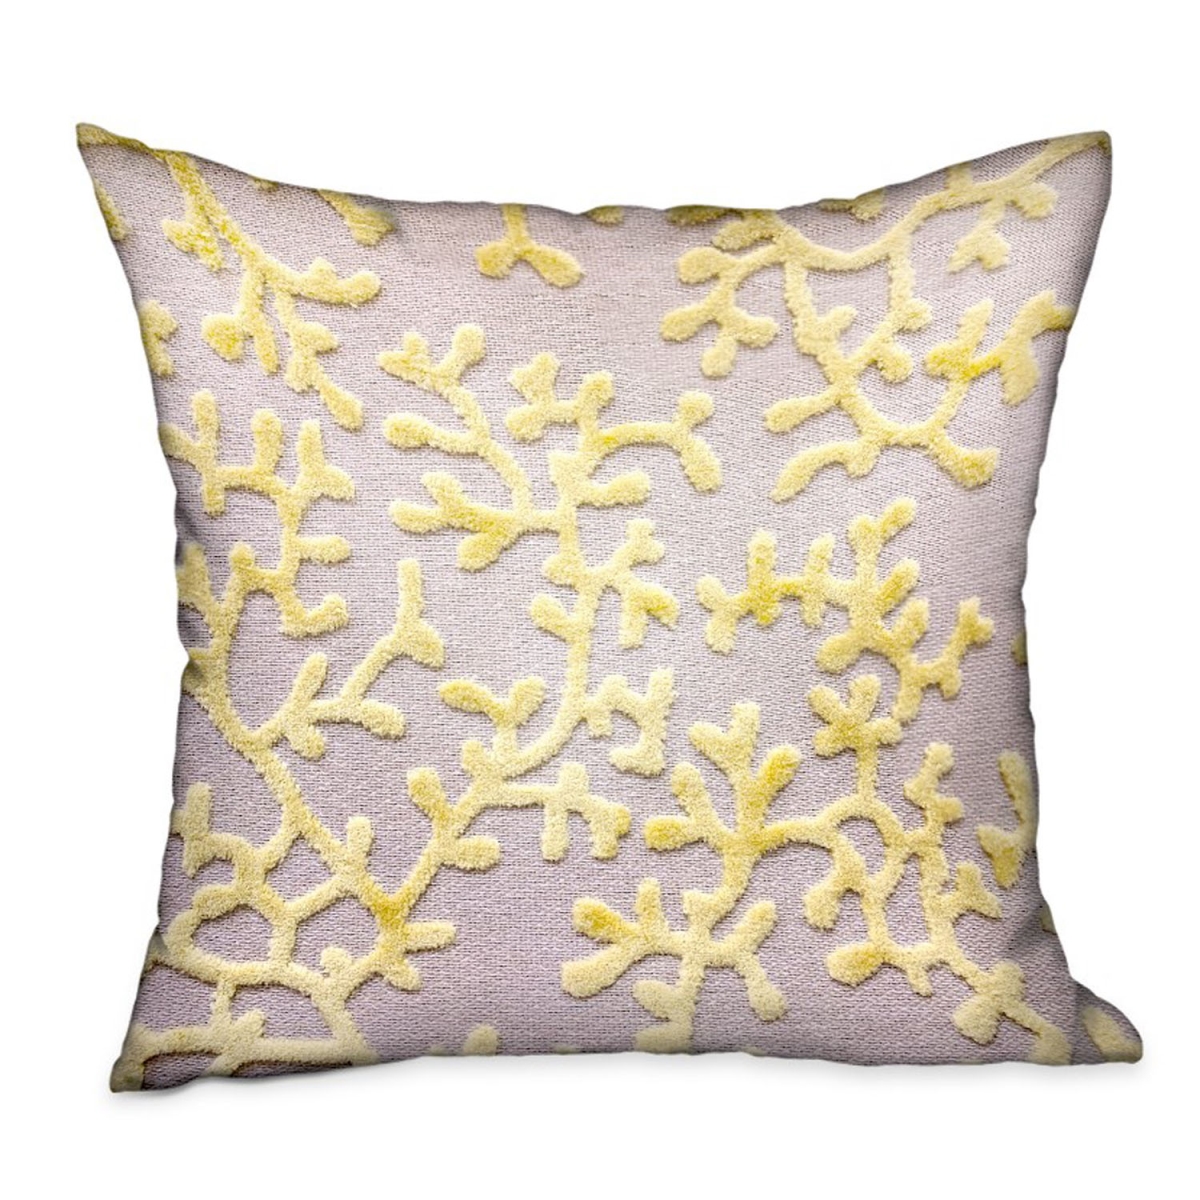 Pbdu1902-1616-dp 16 X 16 In. Lemon Reef Yellow & Cream Floral Luxury Throw Pillow